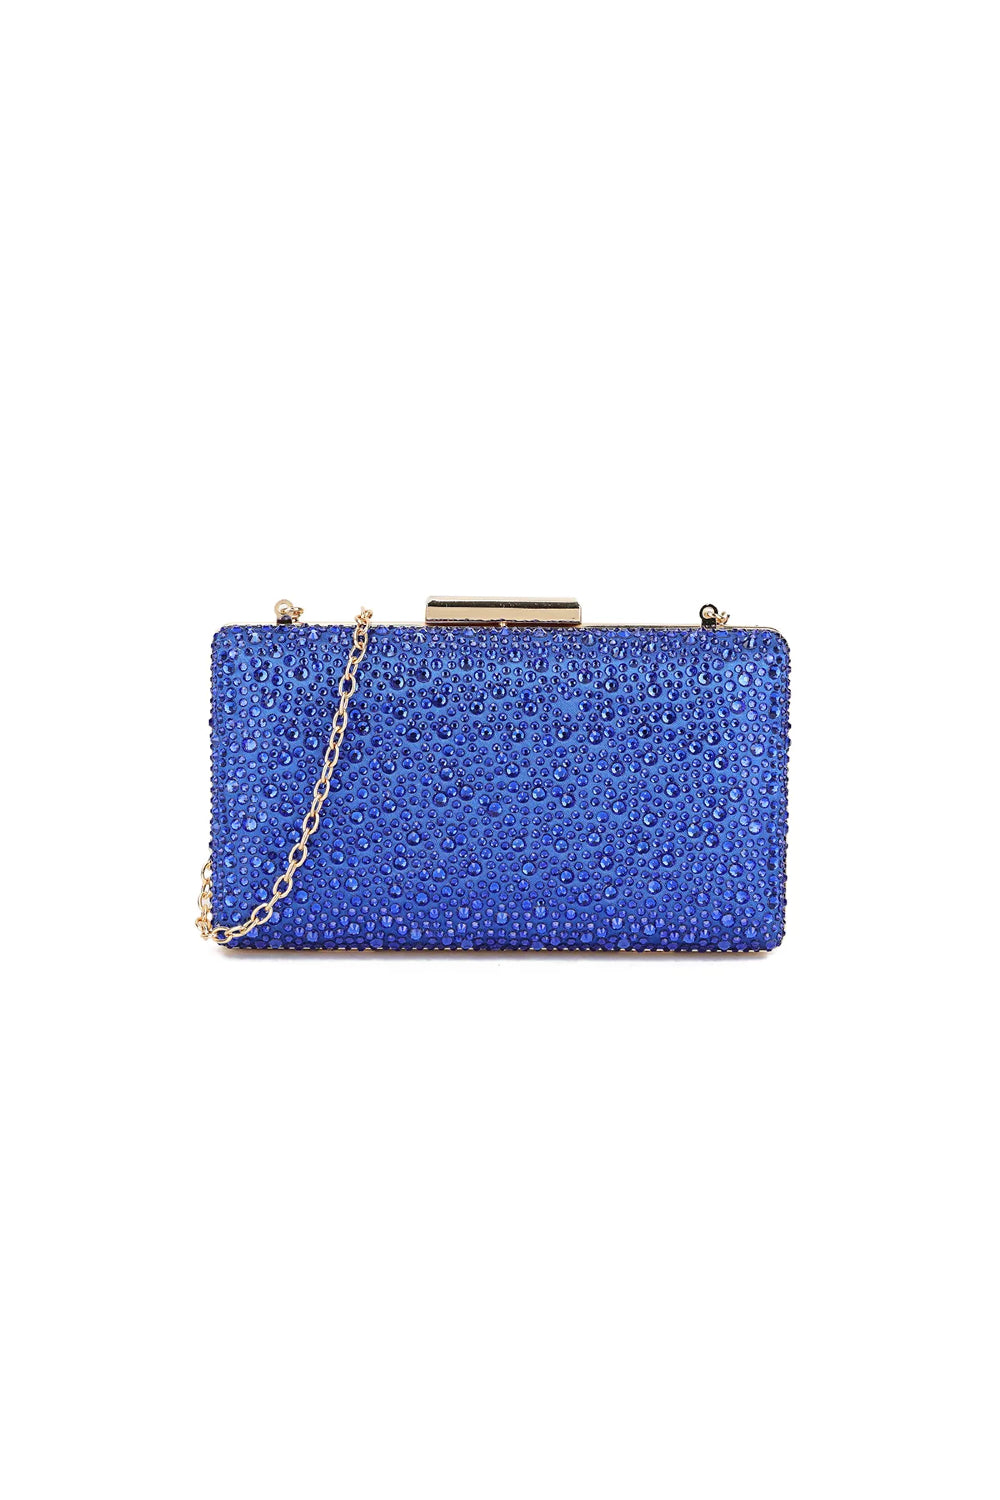 Royal Blue Glitter Evening Clutch Bag